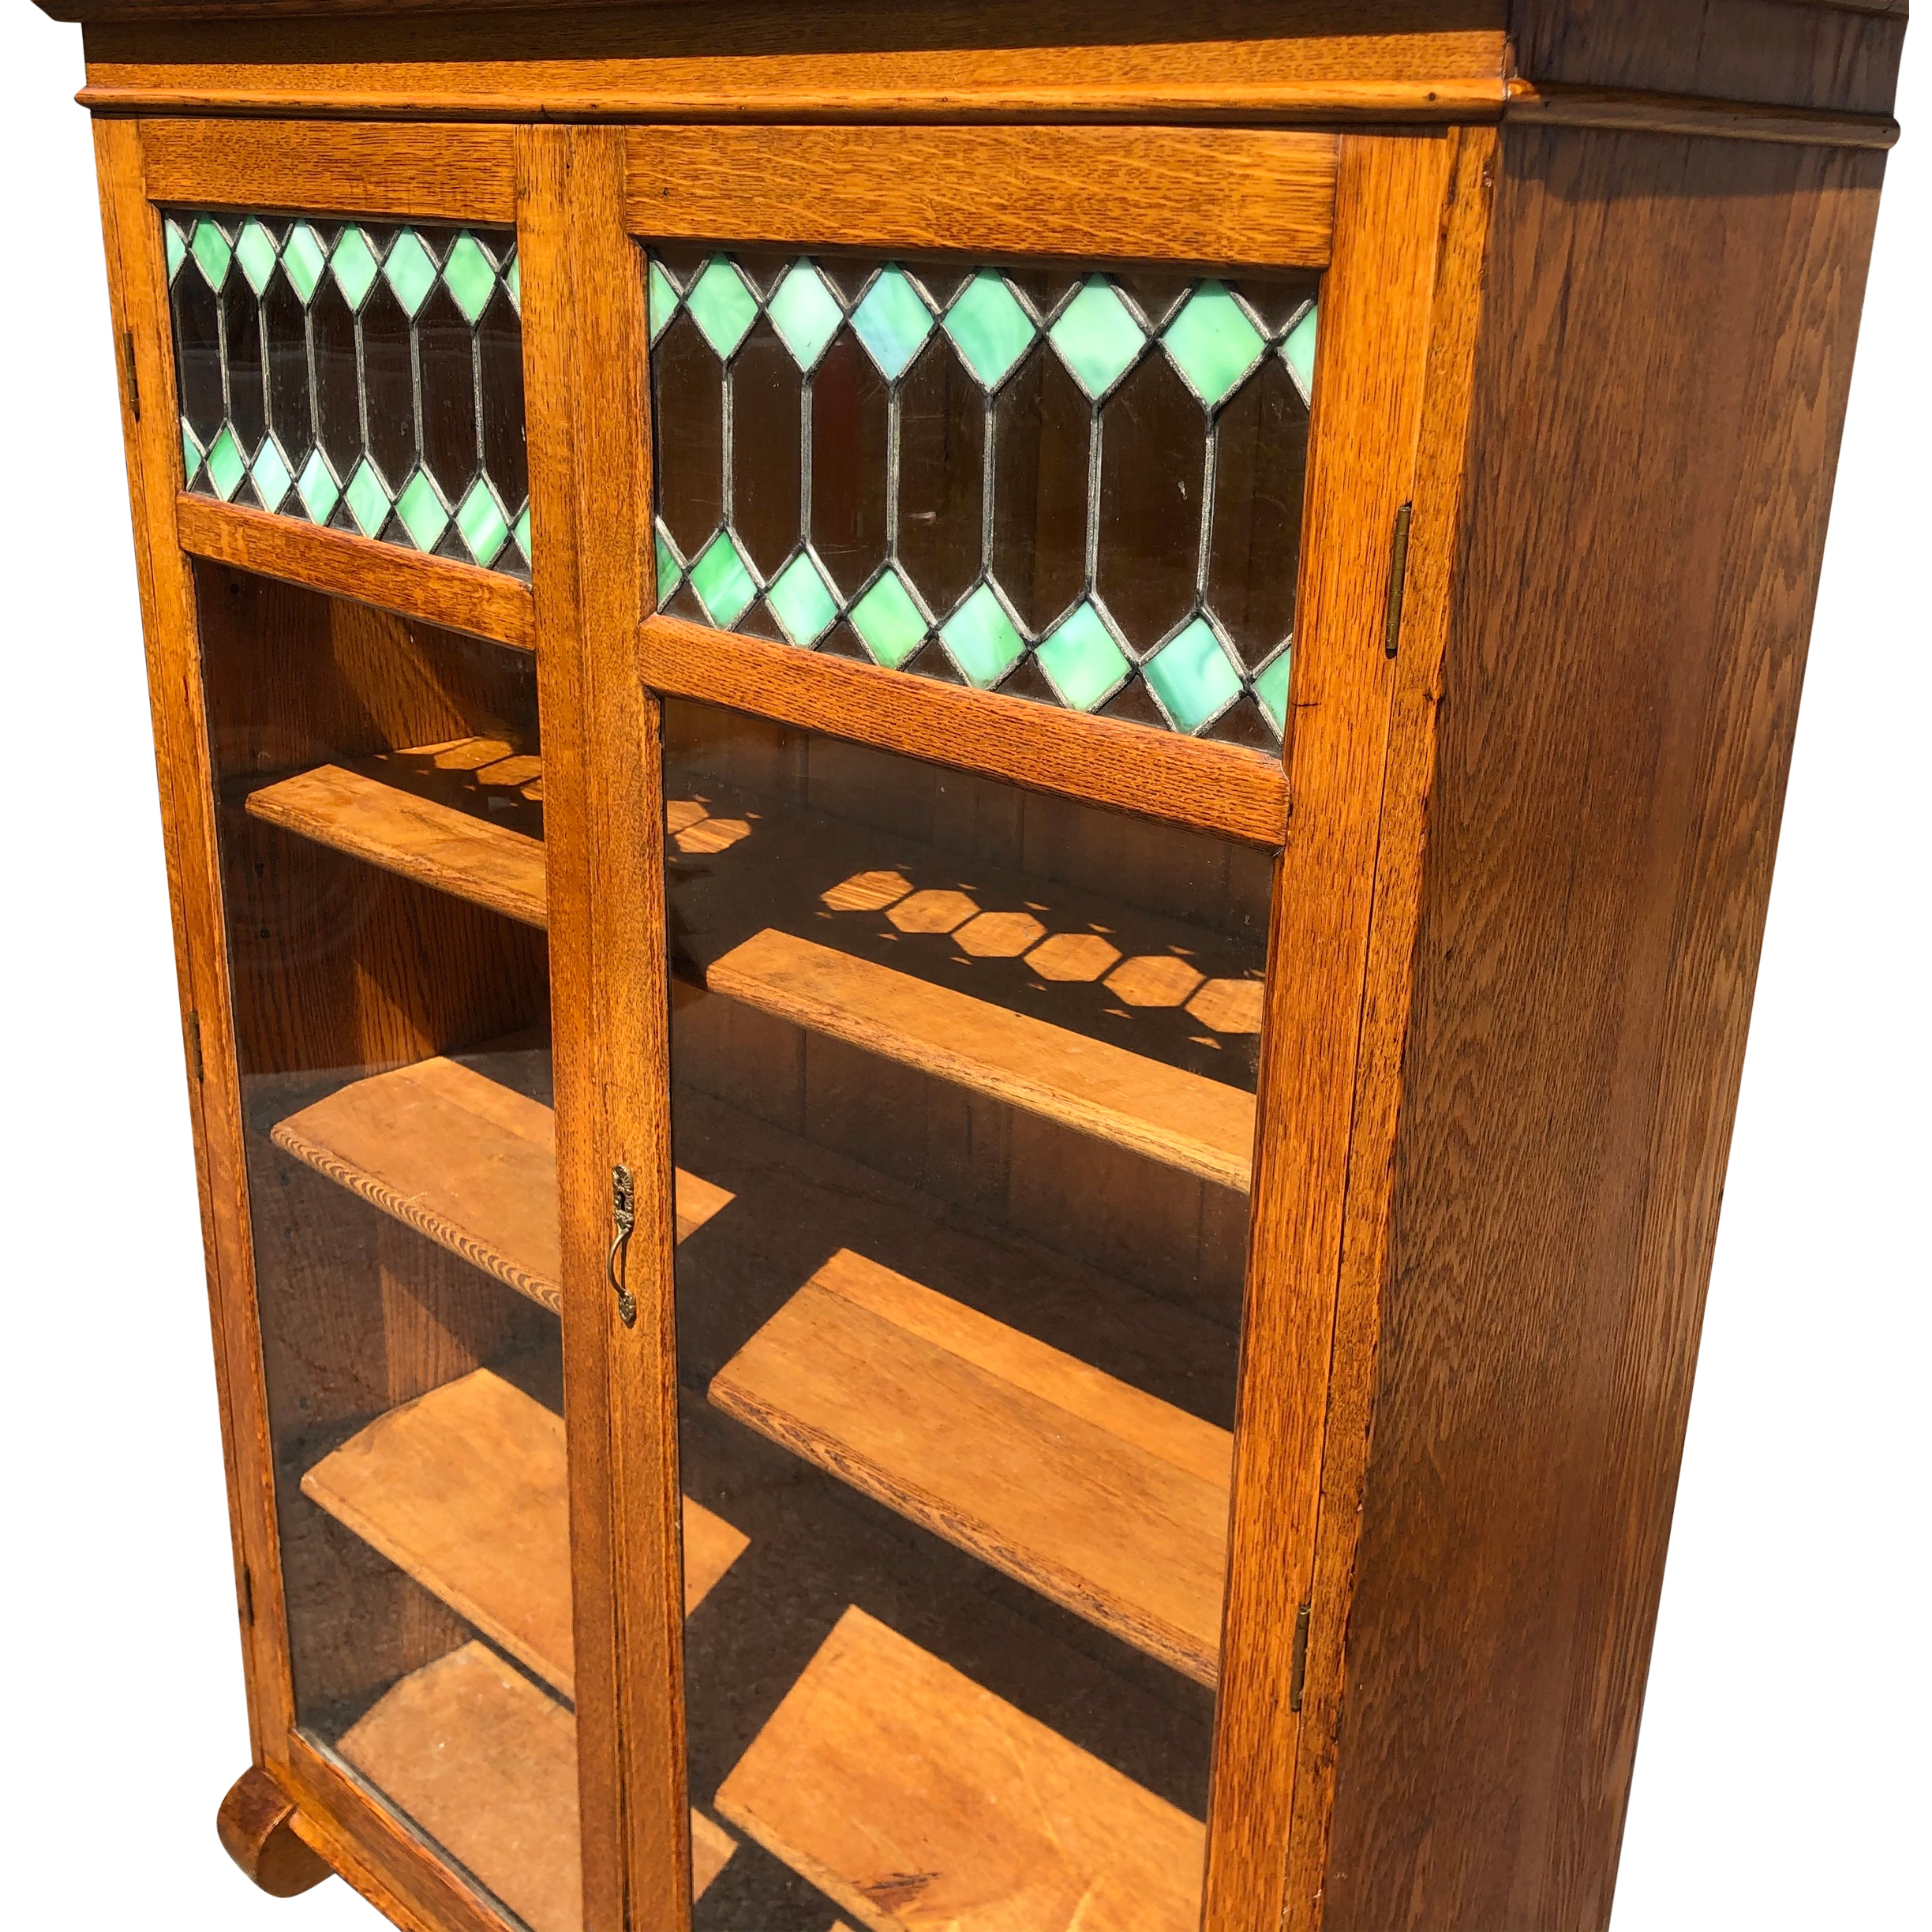 Details about   Antique Larkin Arts & Crafts Quartersawn Oak Blue & Green Stained Glass Bookcase 